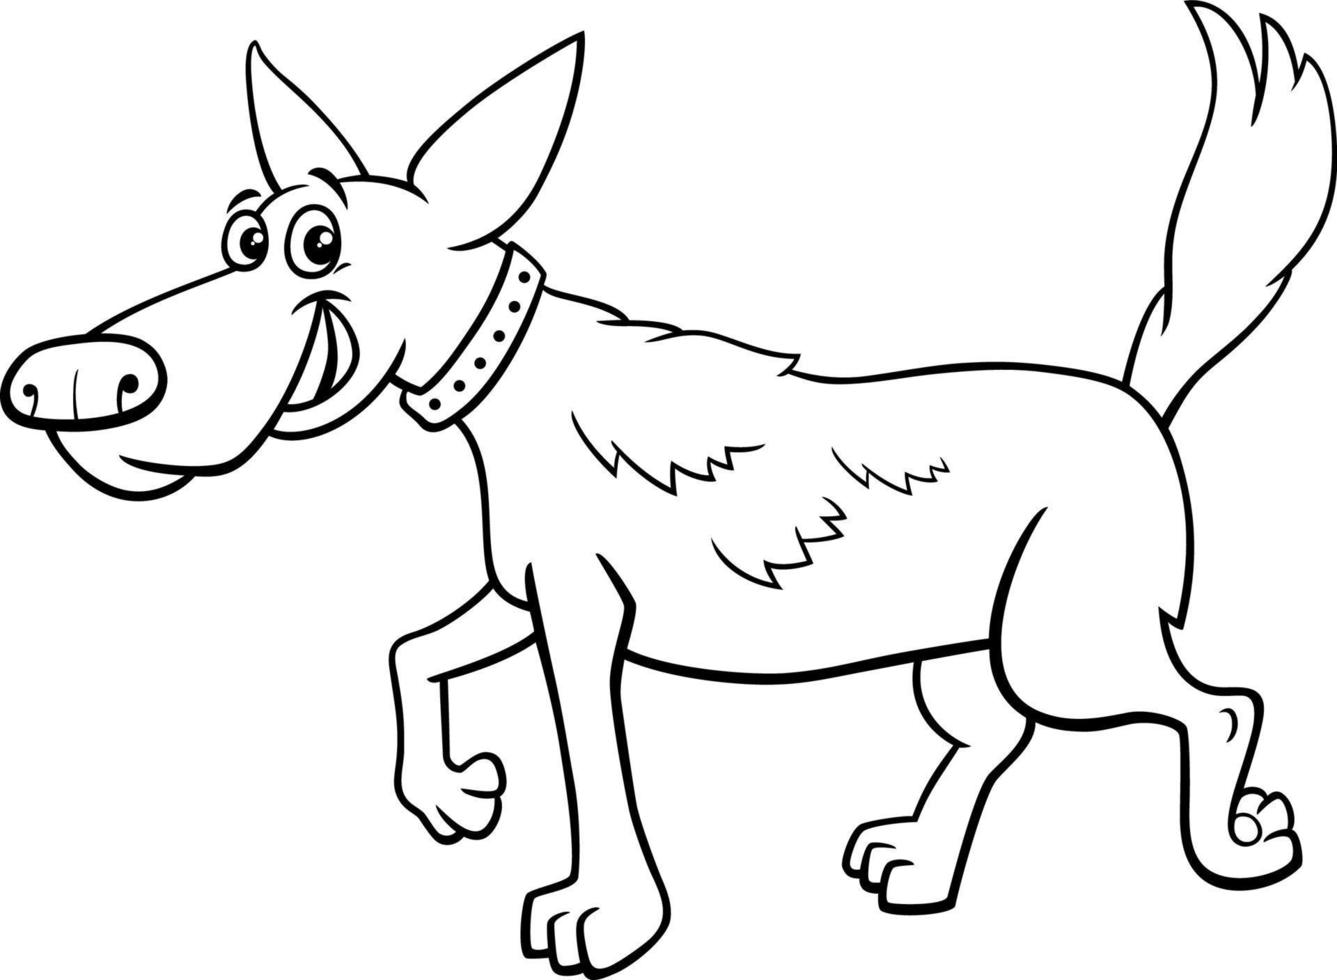 cartoon dog comic animal character coloring page vector